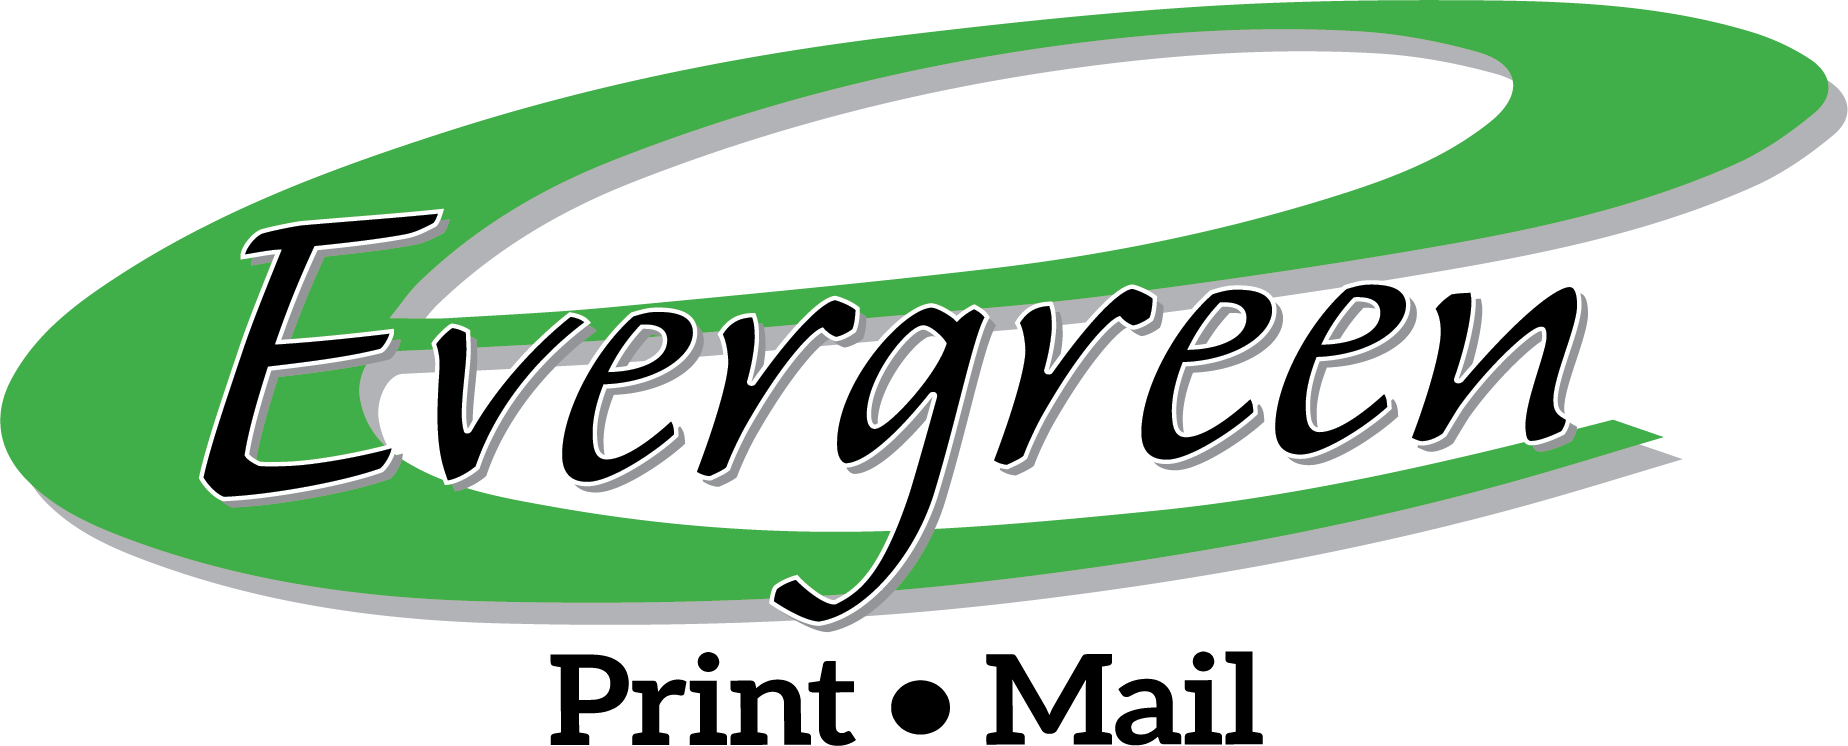 Evergreen Print Mail logo